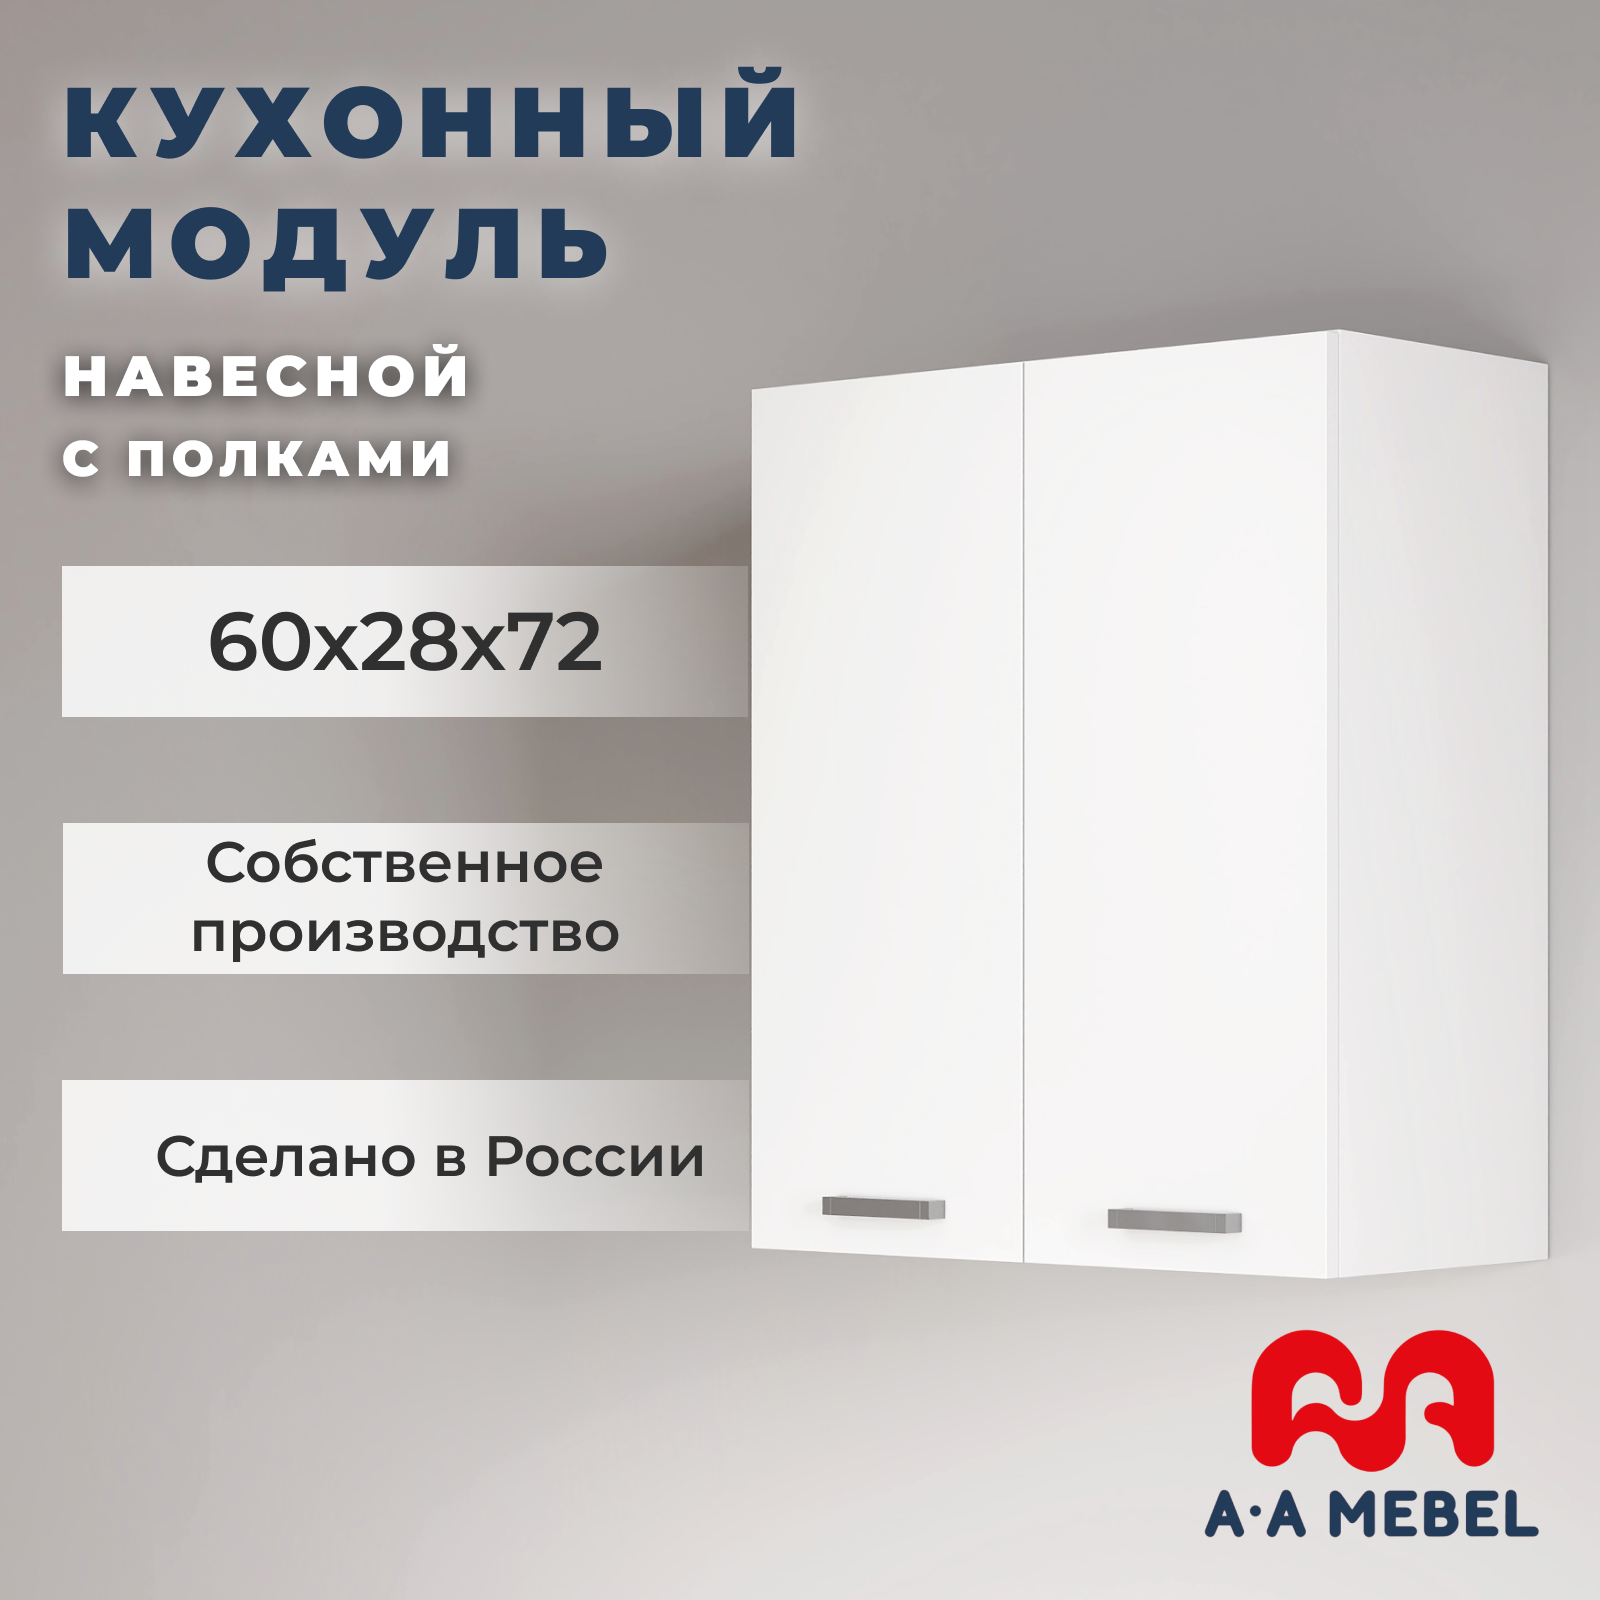 Кухонный модуль A-А MEBEL навесной с полками белый 60х28х72 см